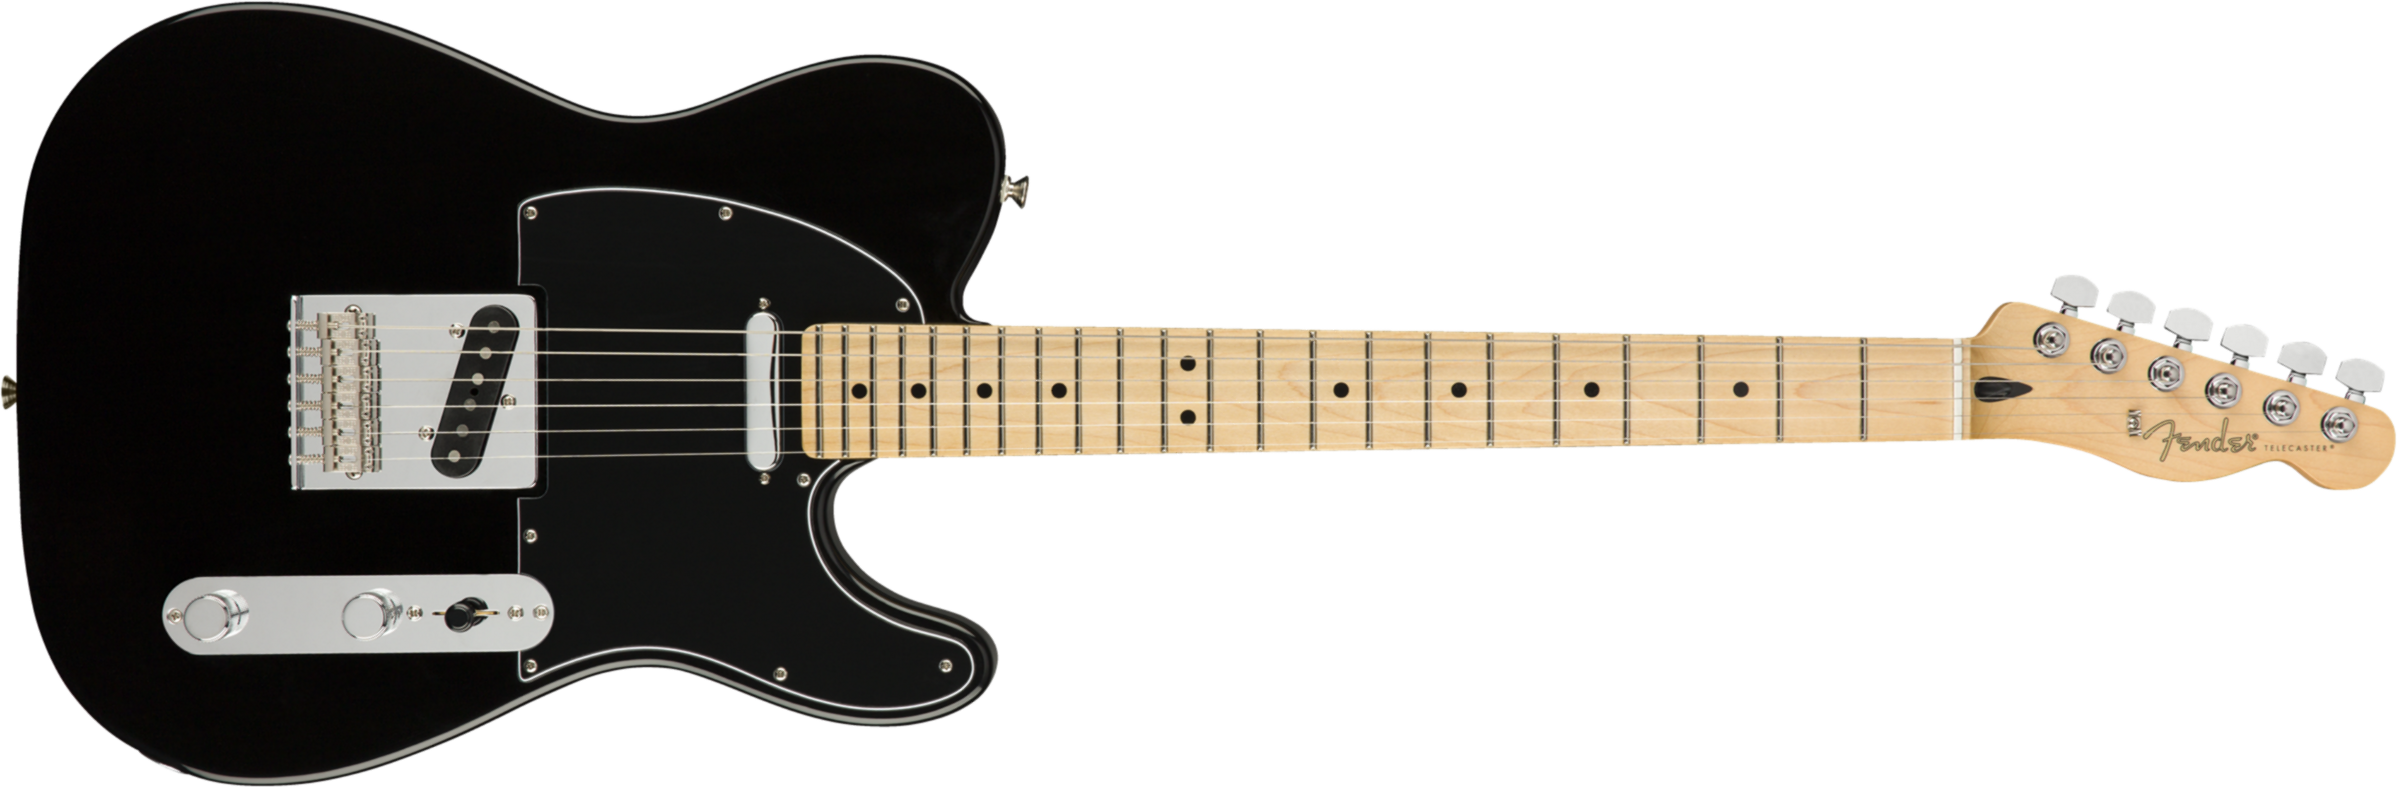 Fender Tele Player Mex Mn - Black - Guitarra eléctrica con forma de tel - Main picture